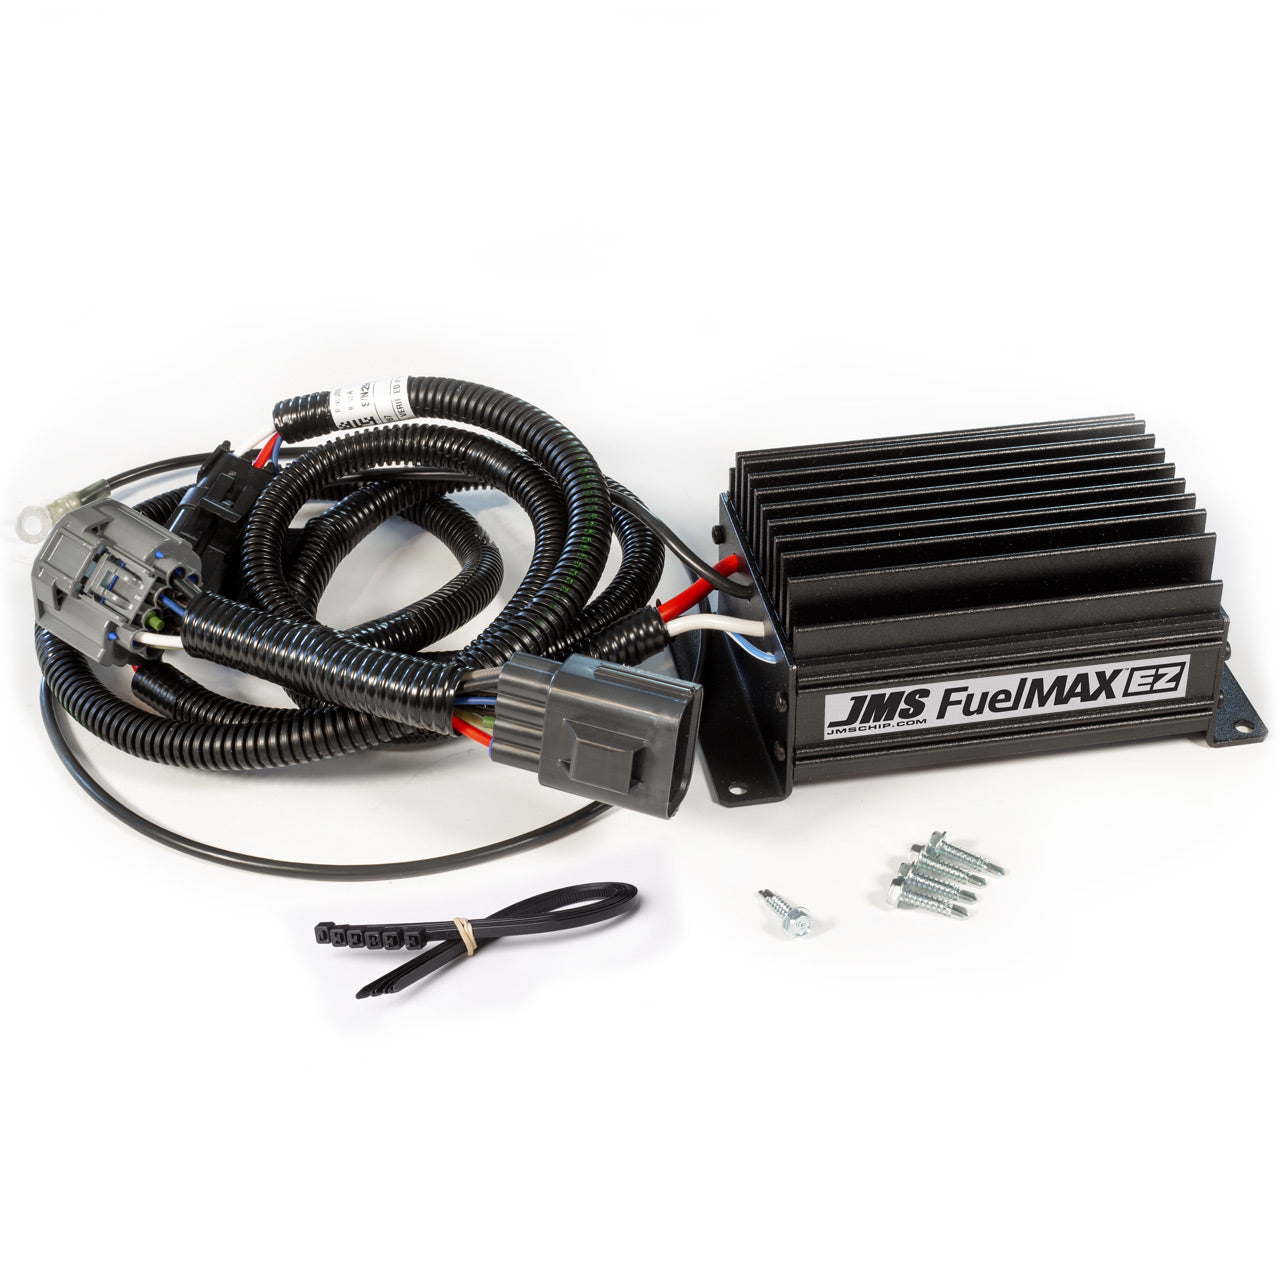 JMS FuelMAX - Fuel Pump Voltage Booster V2 - Plug and Play Single Output P200EZFT15